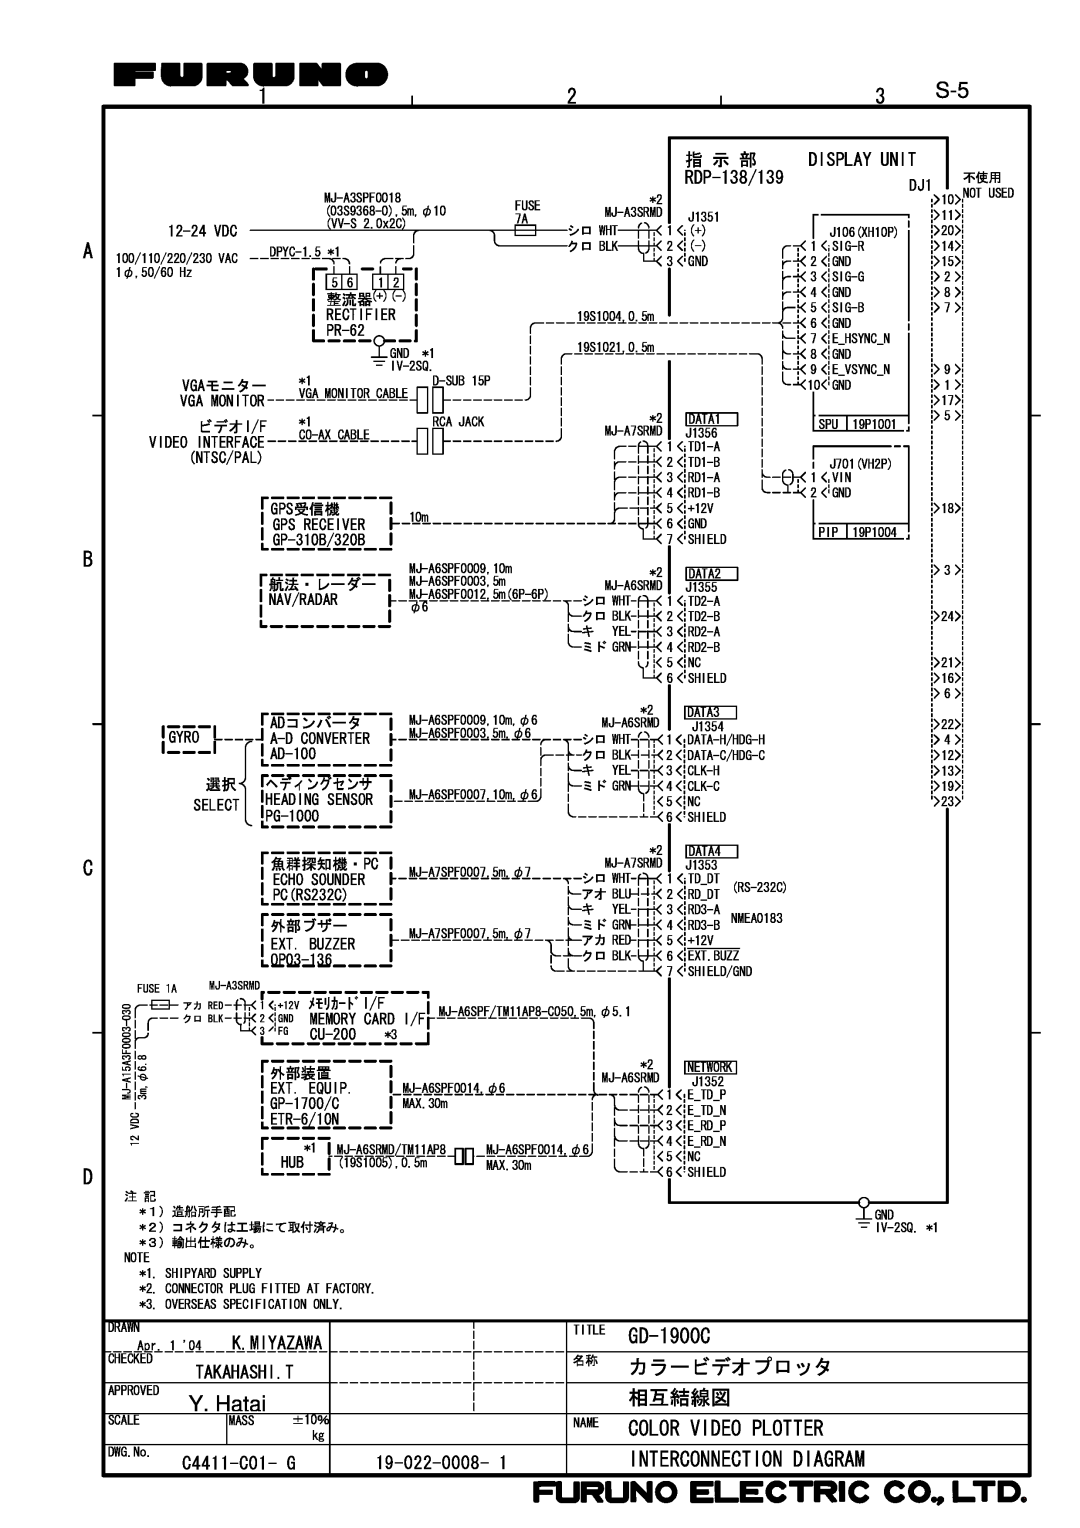 Furuno GD-1900C, 1933C, 1943C, 1833C, 1823C, 1953C Y. Hatai, カラービデオプロッタ, Interconnection Diagram, 相互結線図, 指 示 部, 19-022-0008 